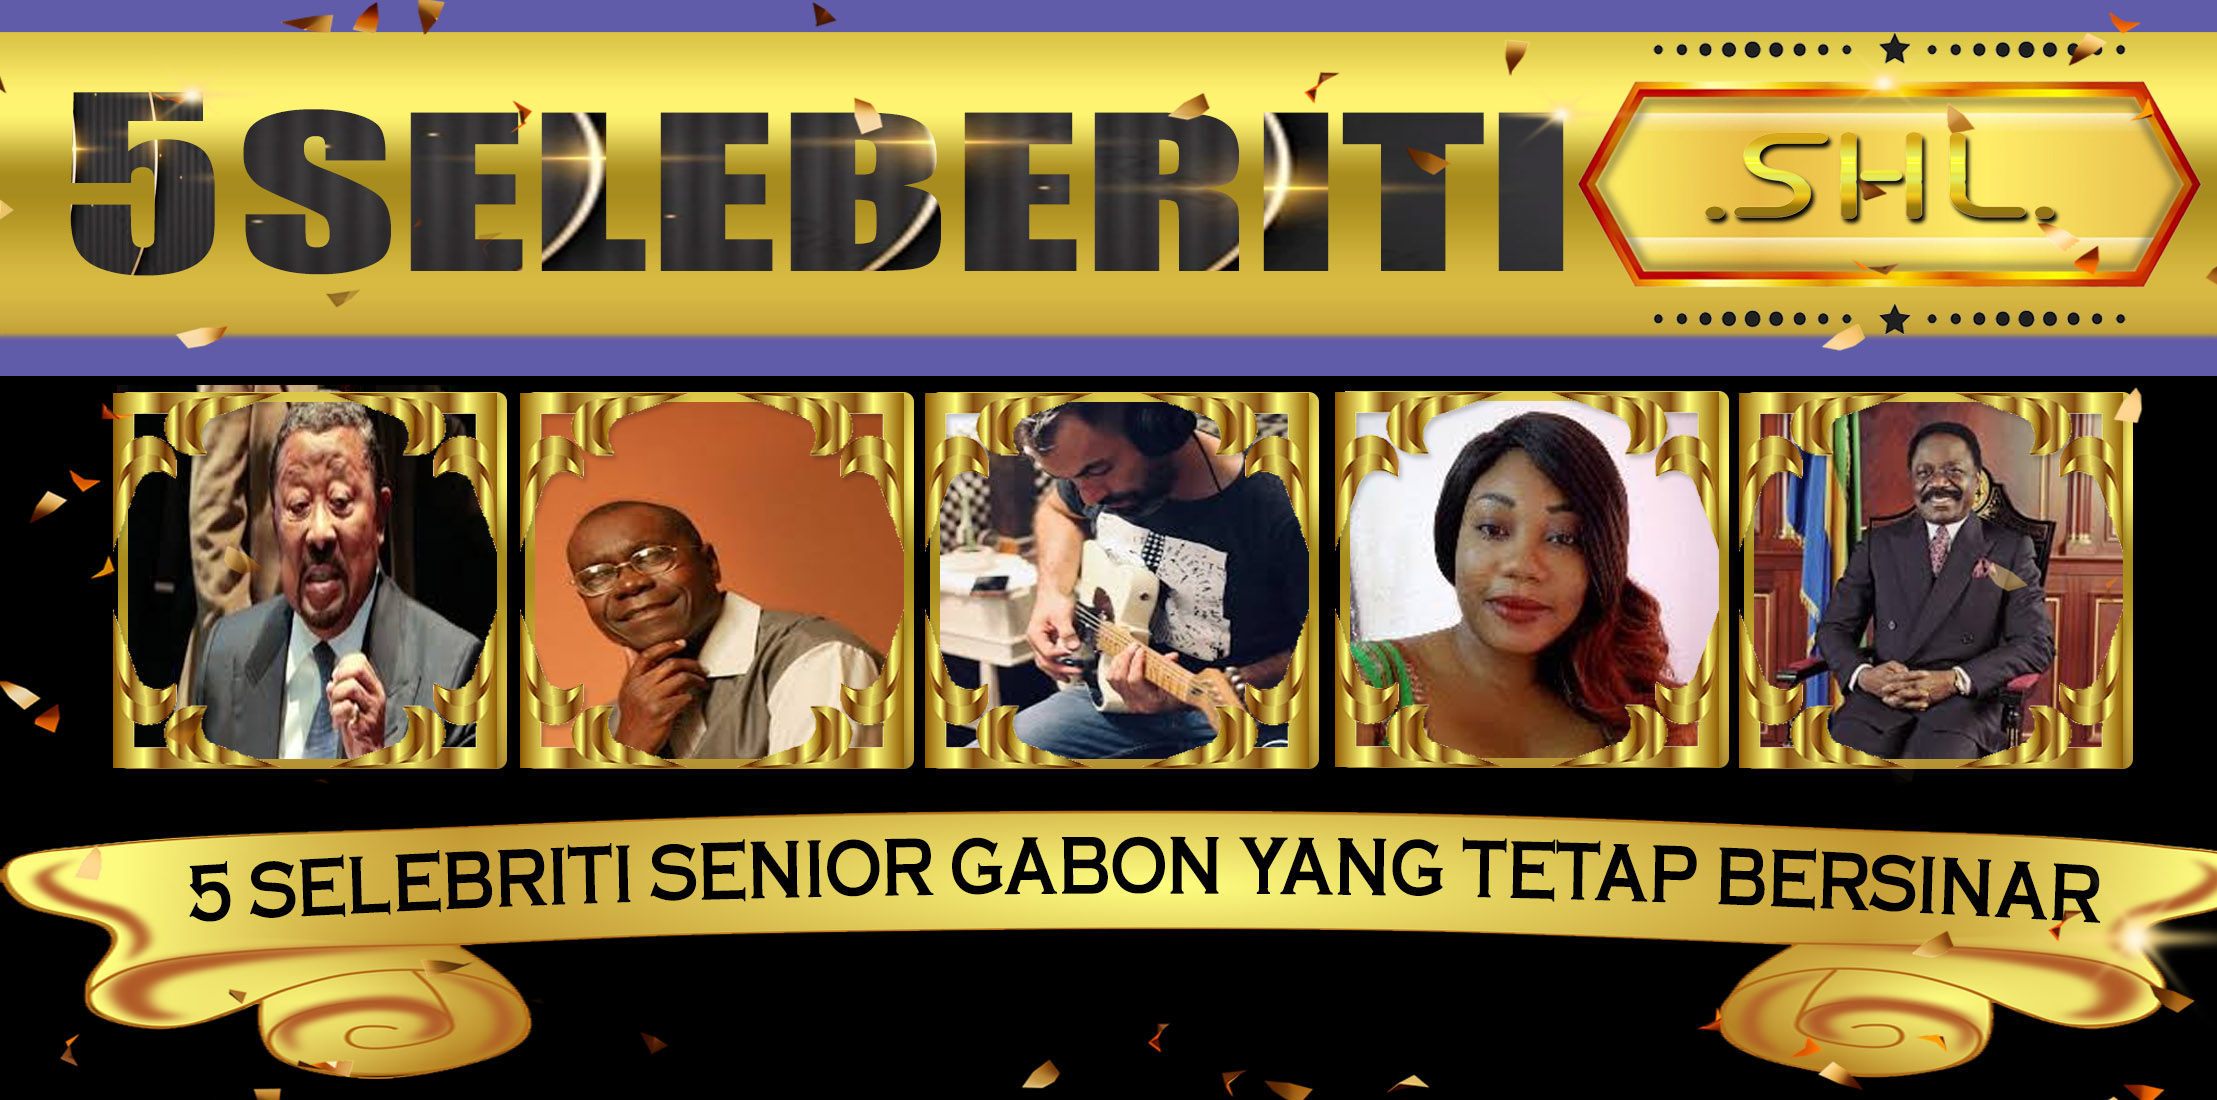 5 Selebriti Senior Gabon